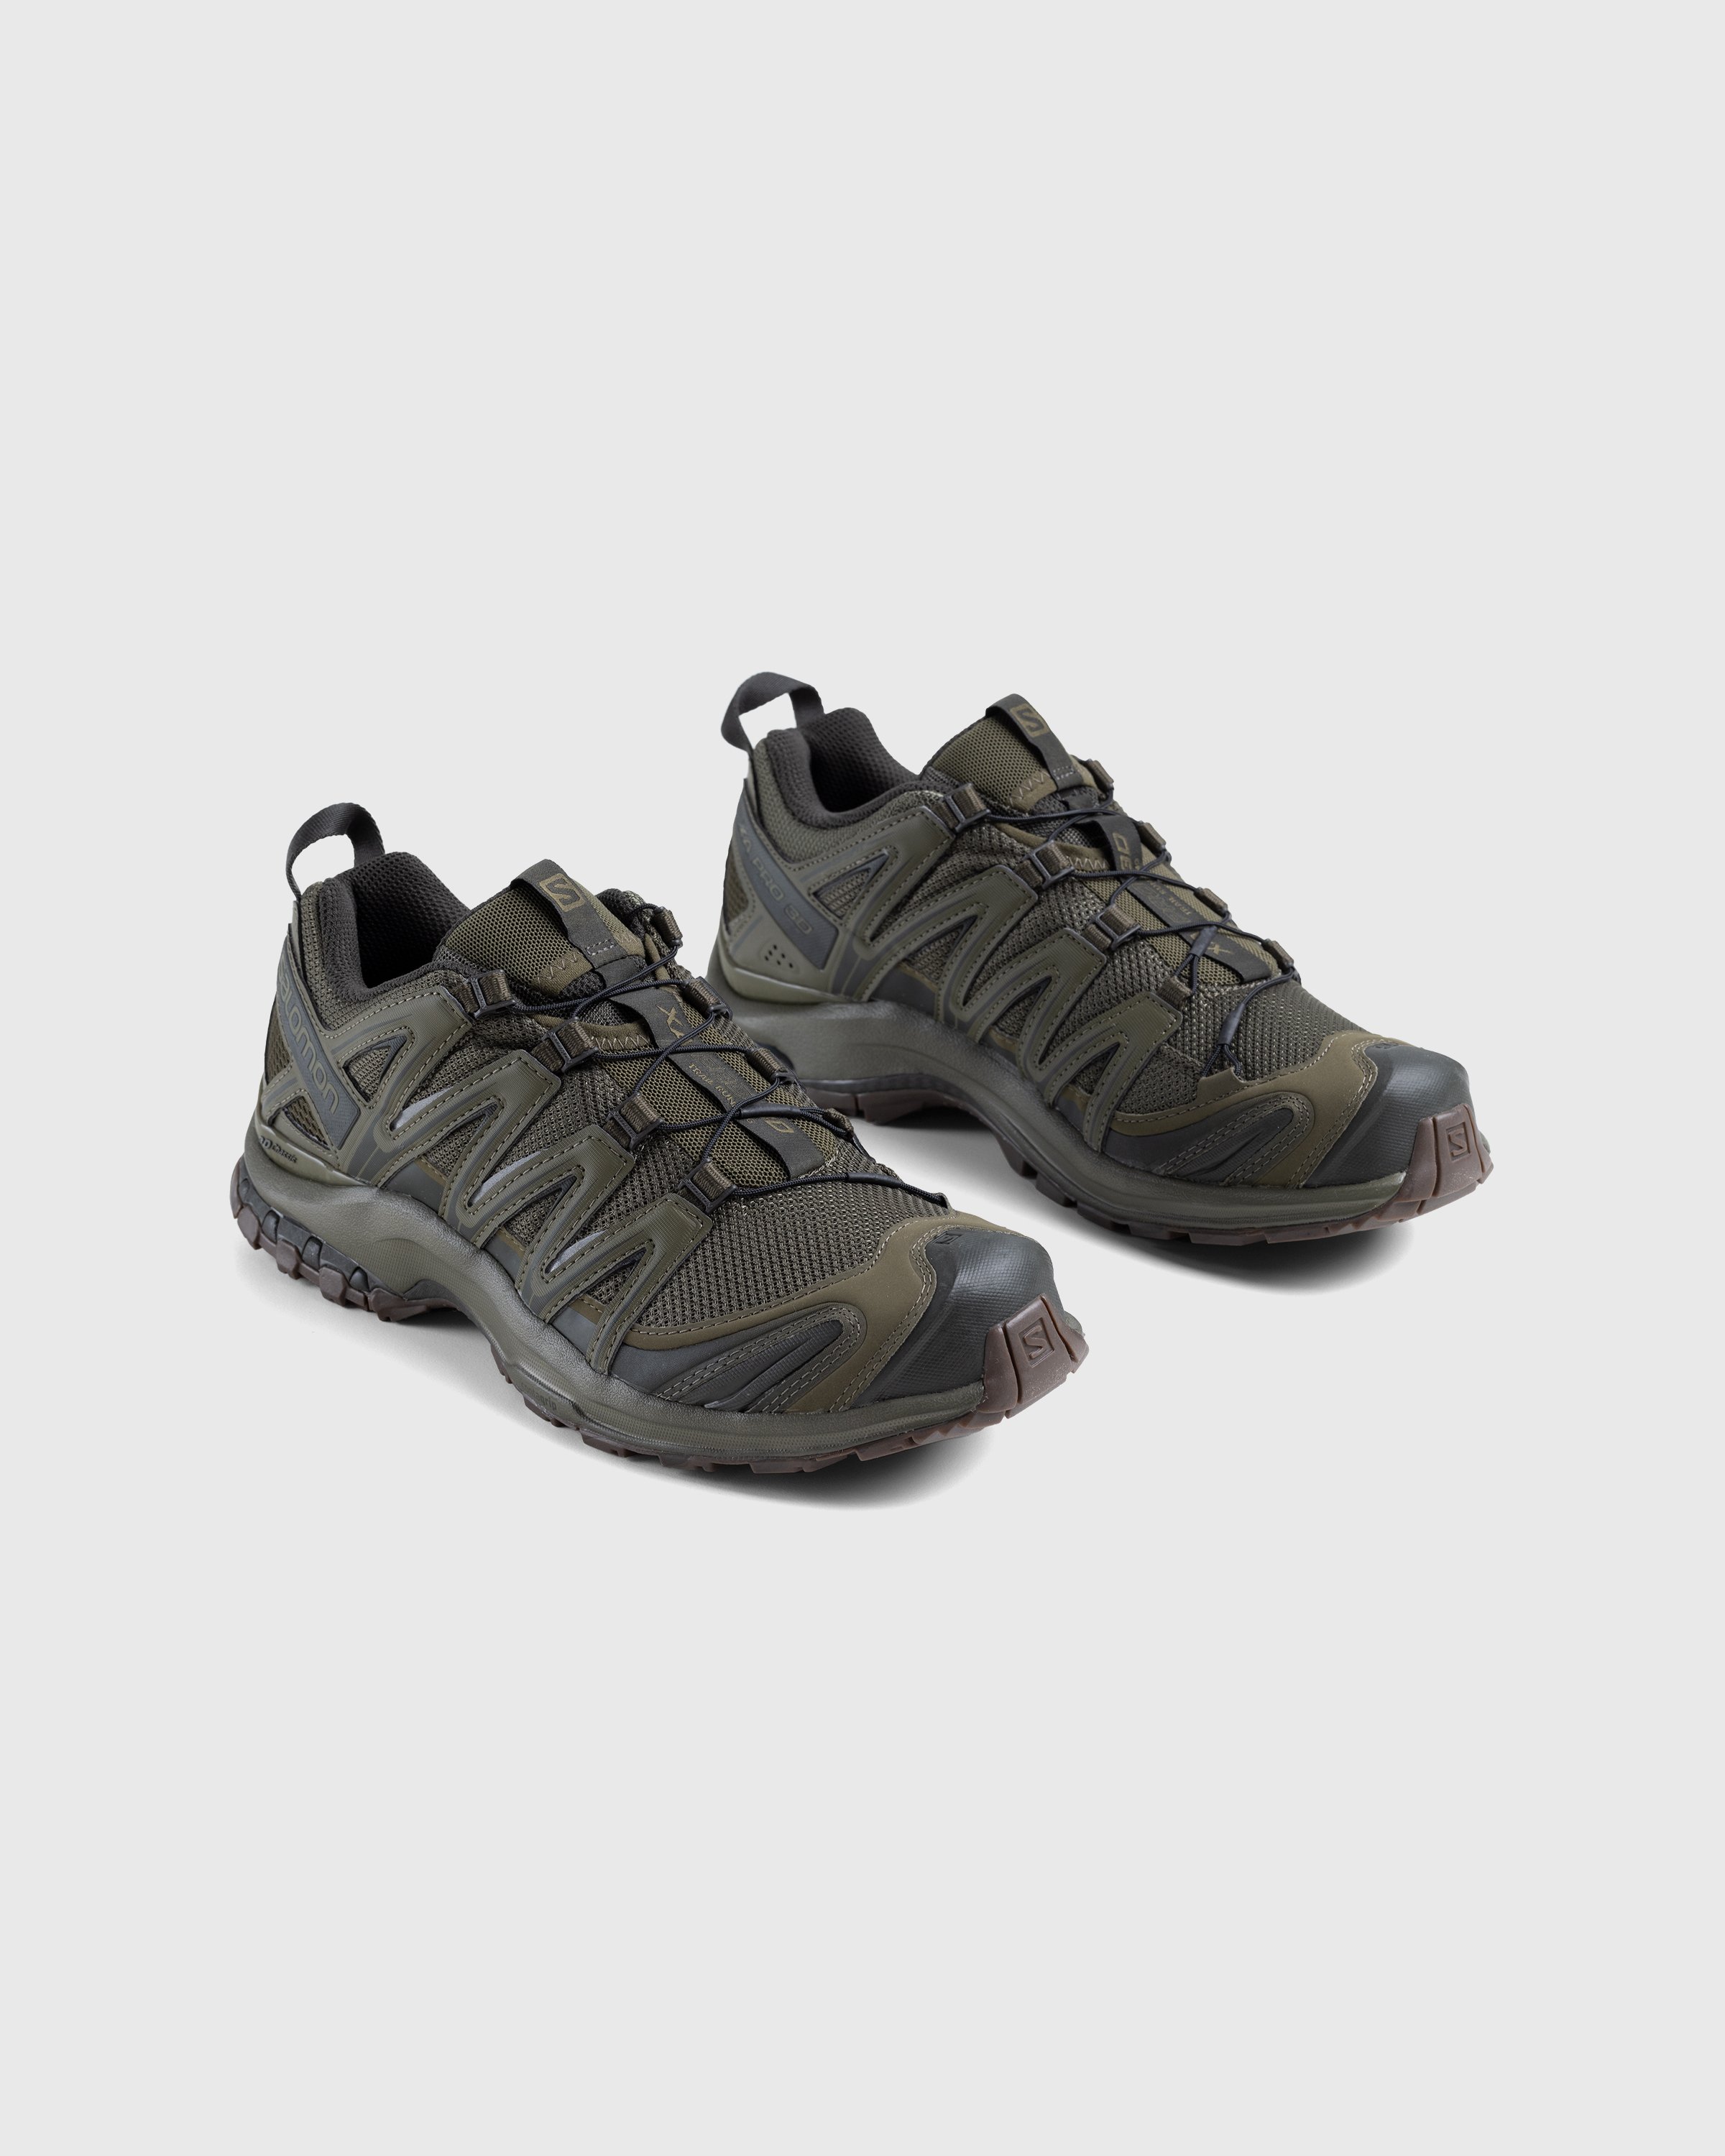 Salomon - XA Pro 3D Olive Night/Peat - Footwear - Black - Image 3